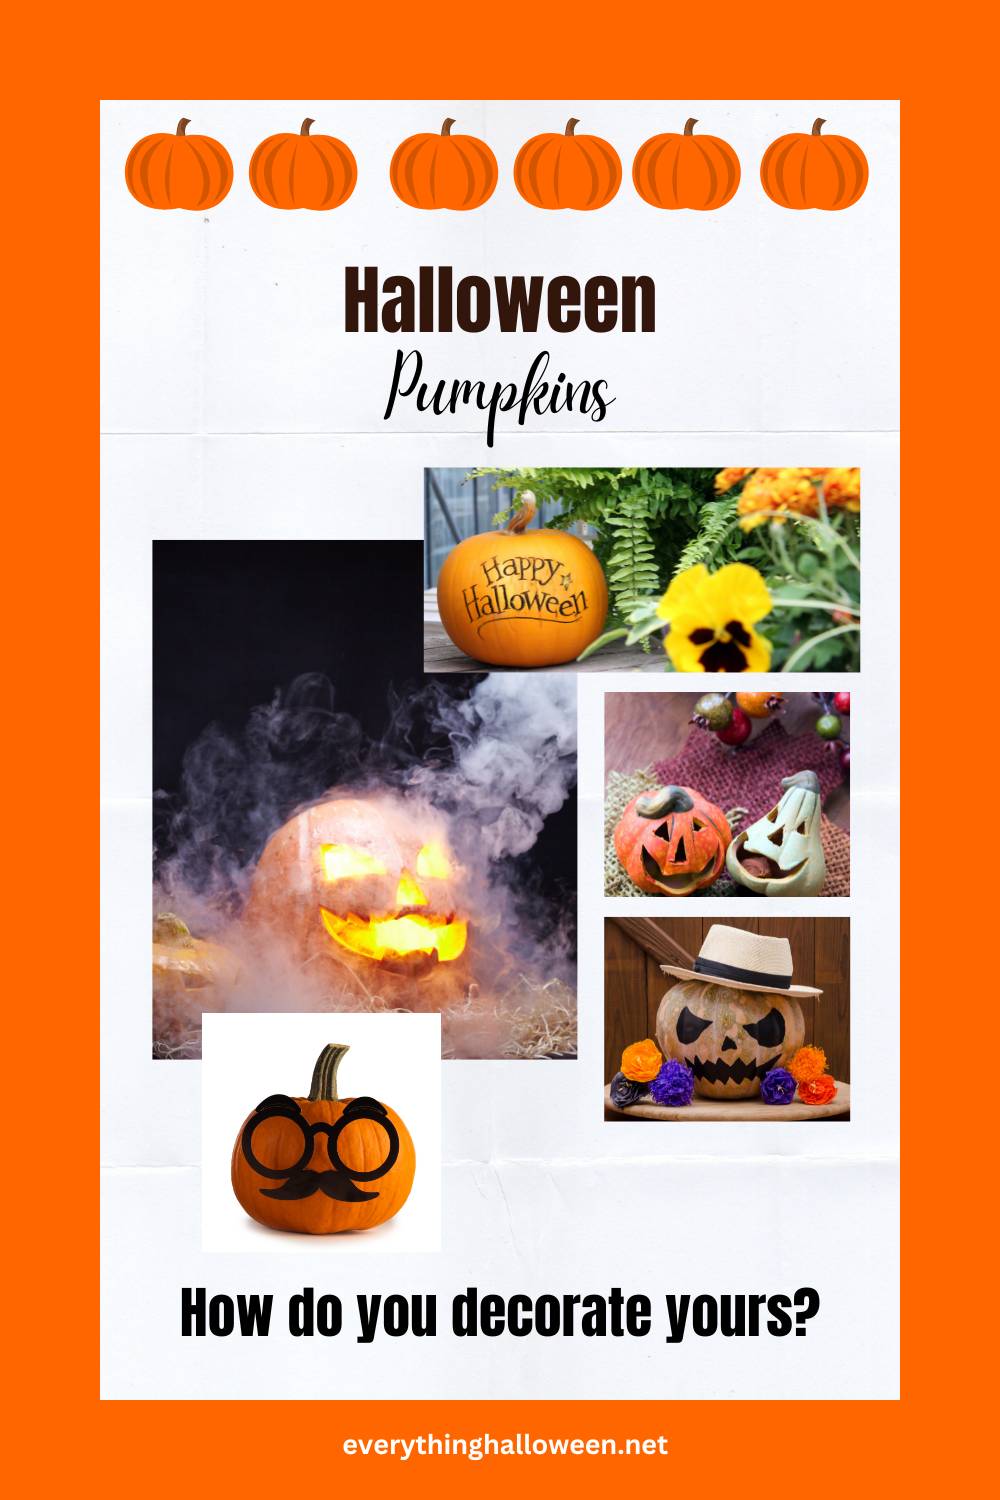 Halloween Pumpkins, ideas for decorating your pumpkins this season